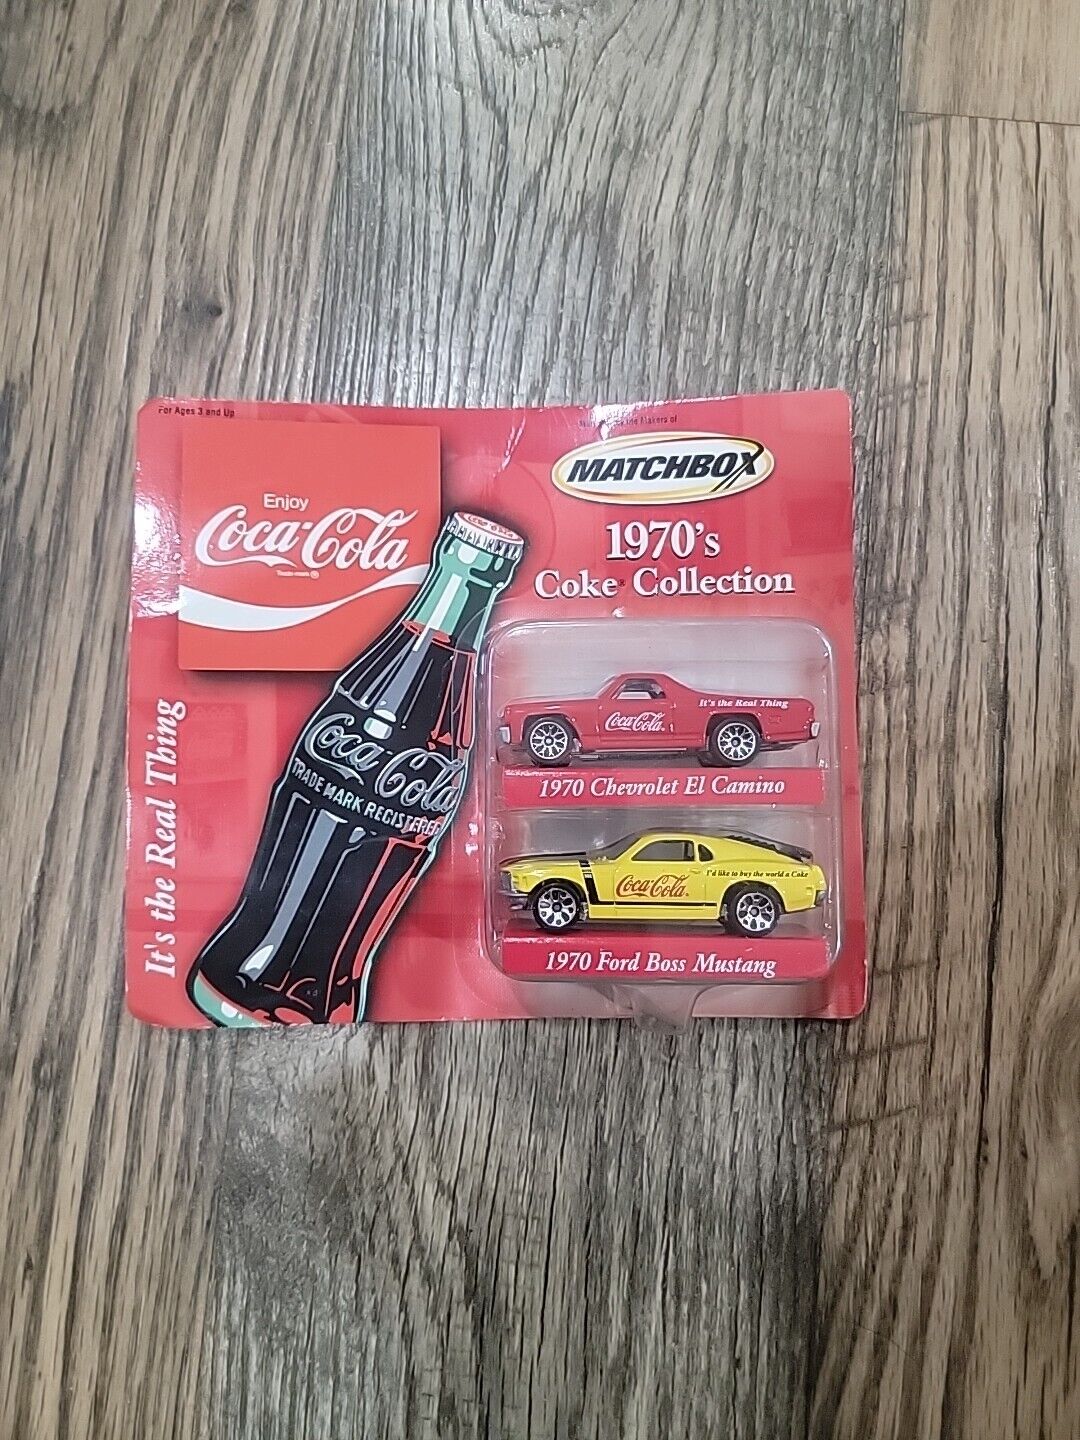 Matchbox Coca Cola 1970’s Coke Collection Diecast Cars